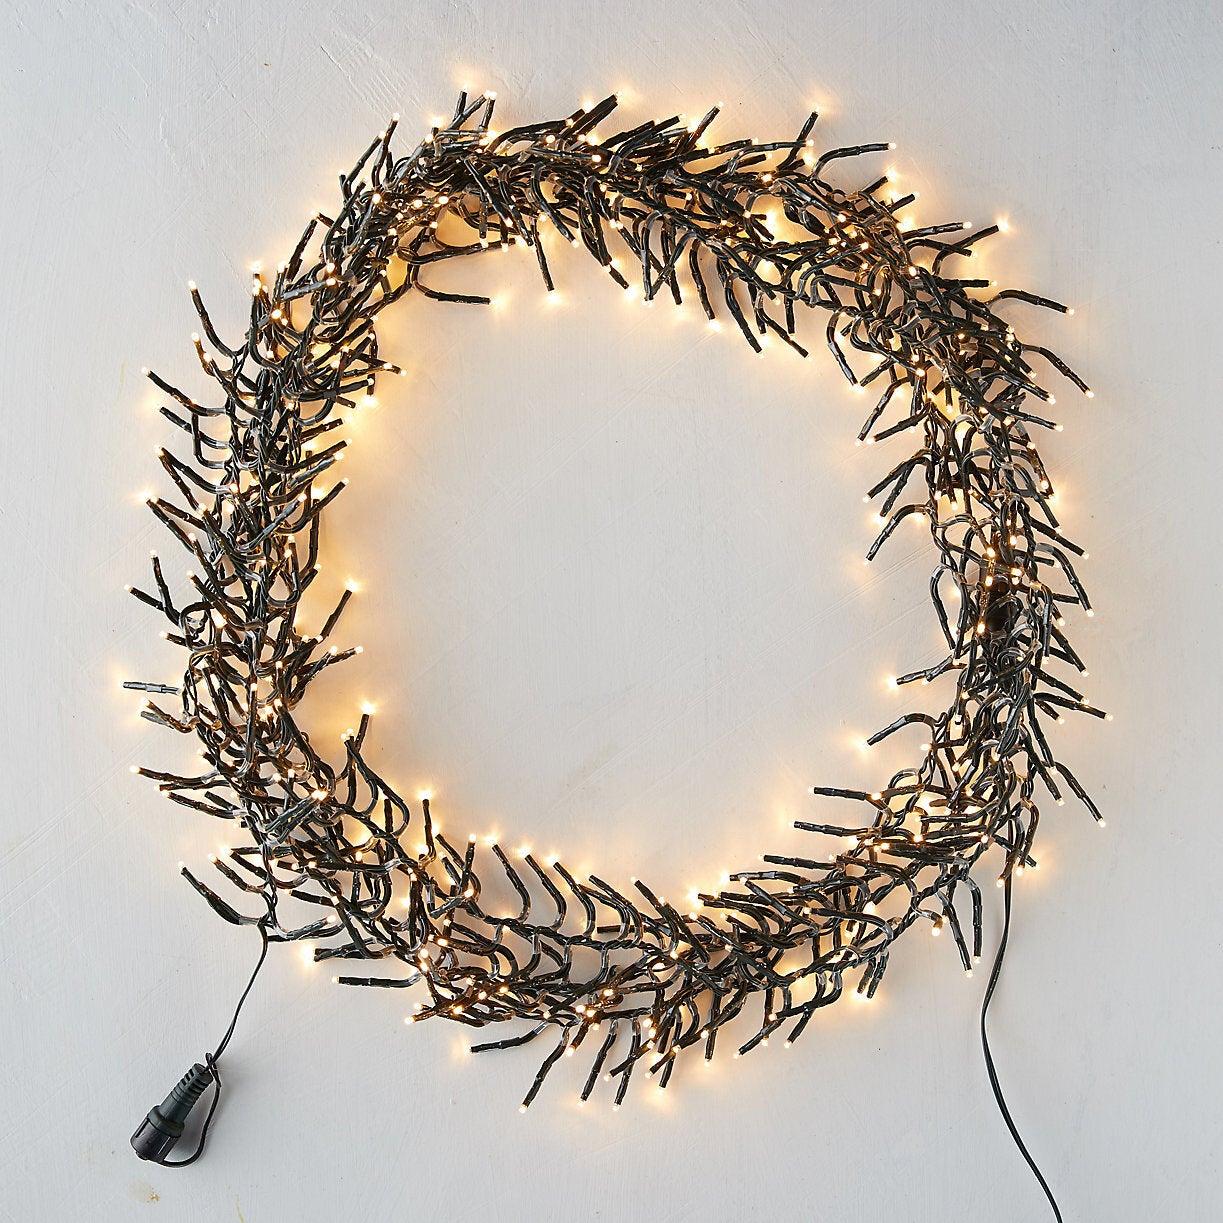 The Best Indoor Christmas Light Option: Terrain Cluster LED Connectable Light String